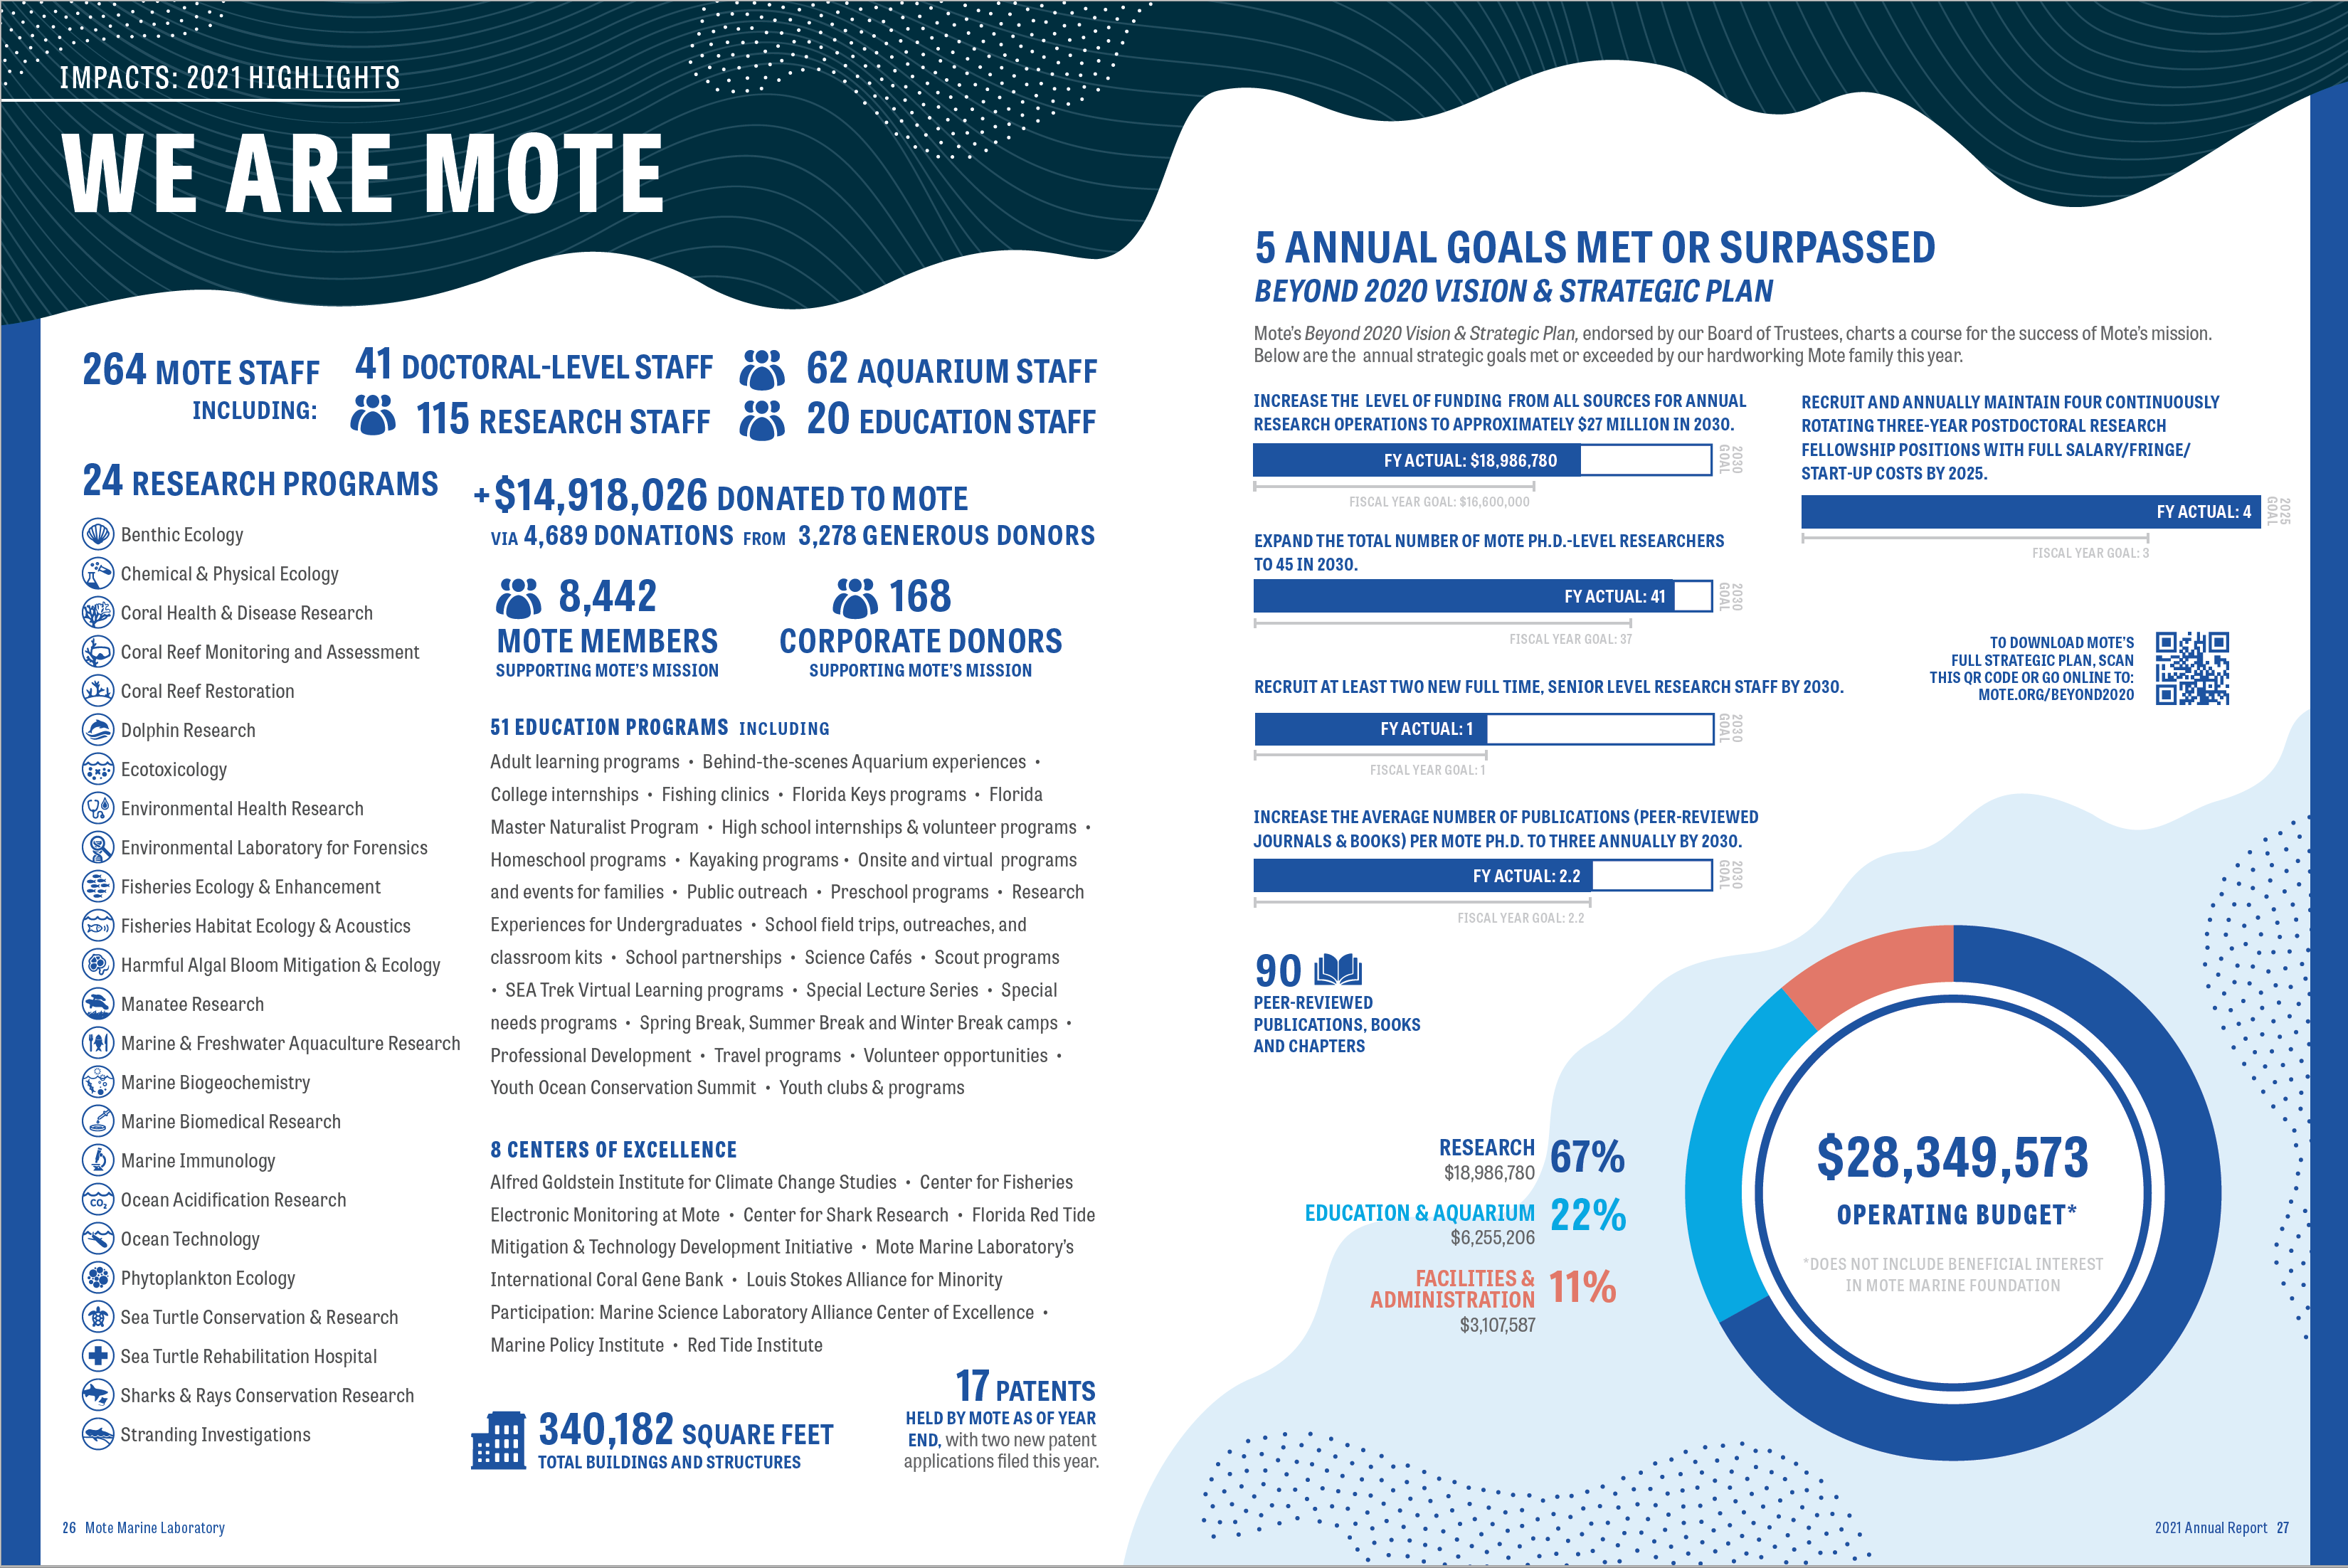 Mote Marine Laboratory's 2021 Highlights: Who We Are statistics